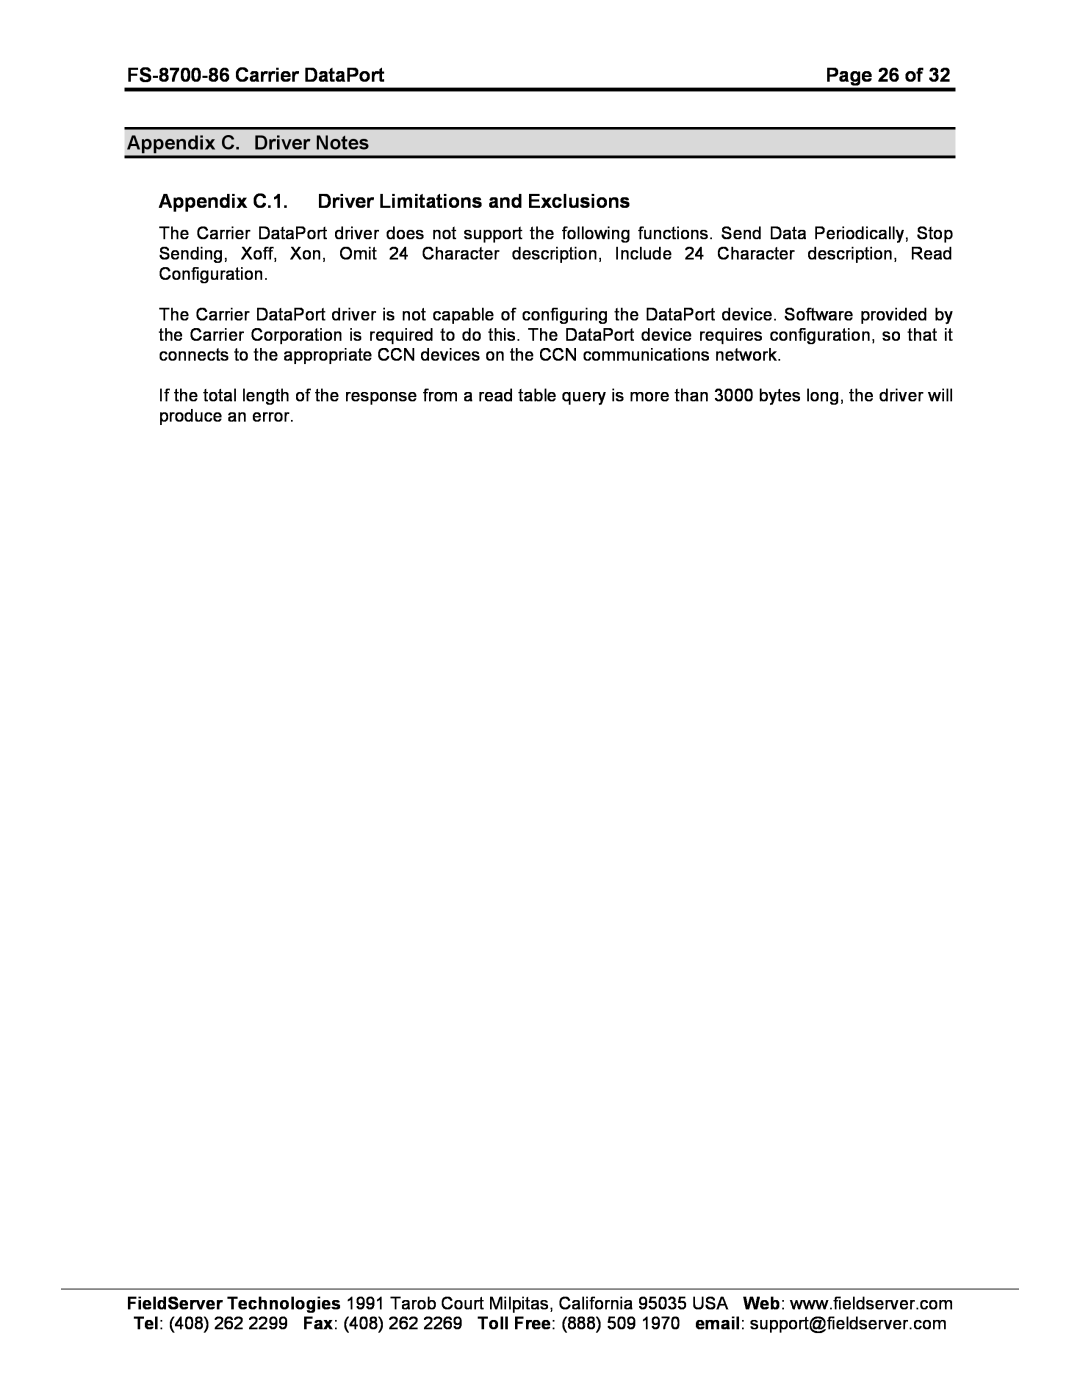 FieldServer FS-8700-86 Page 26 of, Appendix C. Driver Notes, Appendix C.1. Driver Limitations and Exclusions 